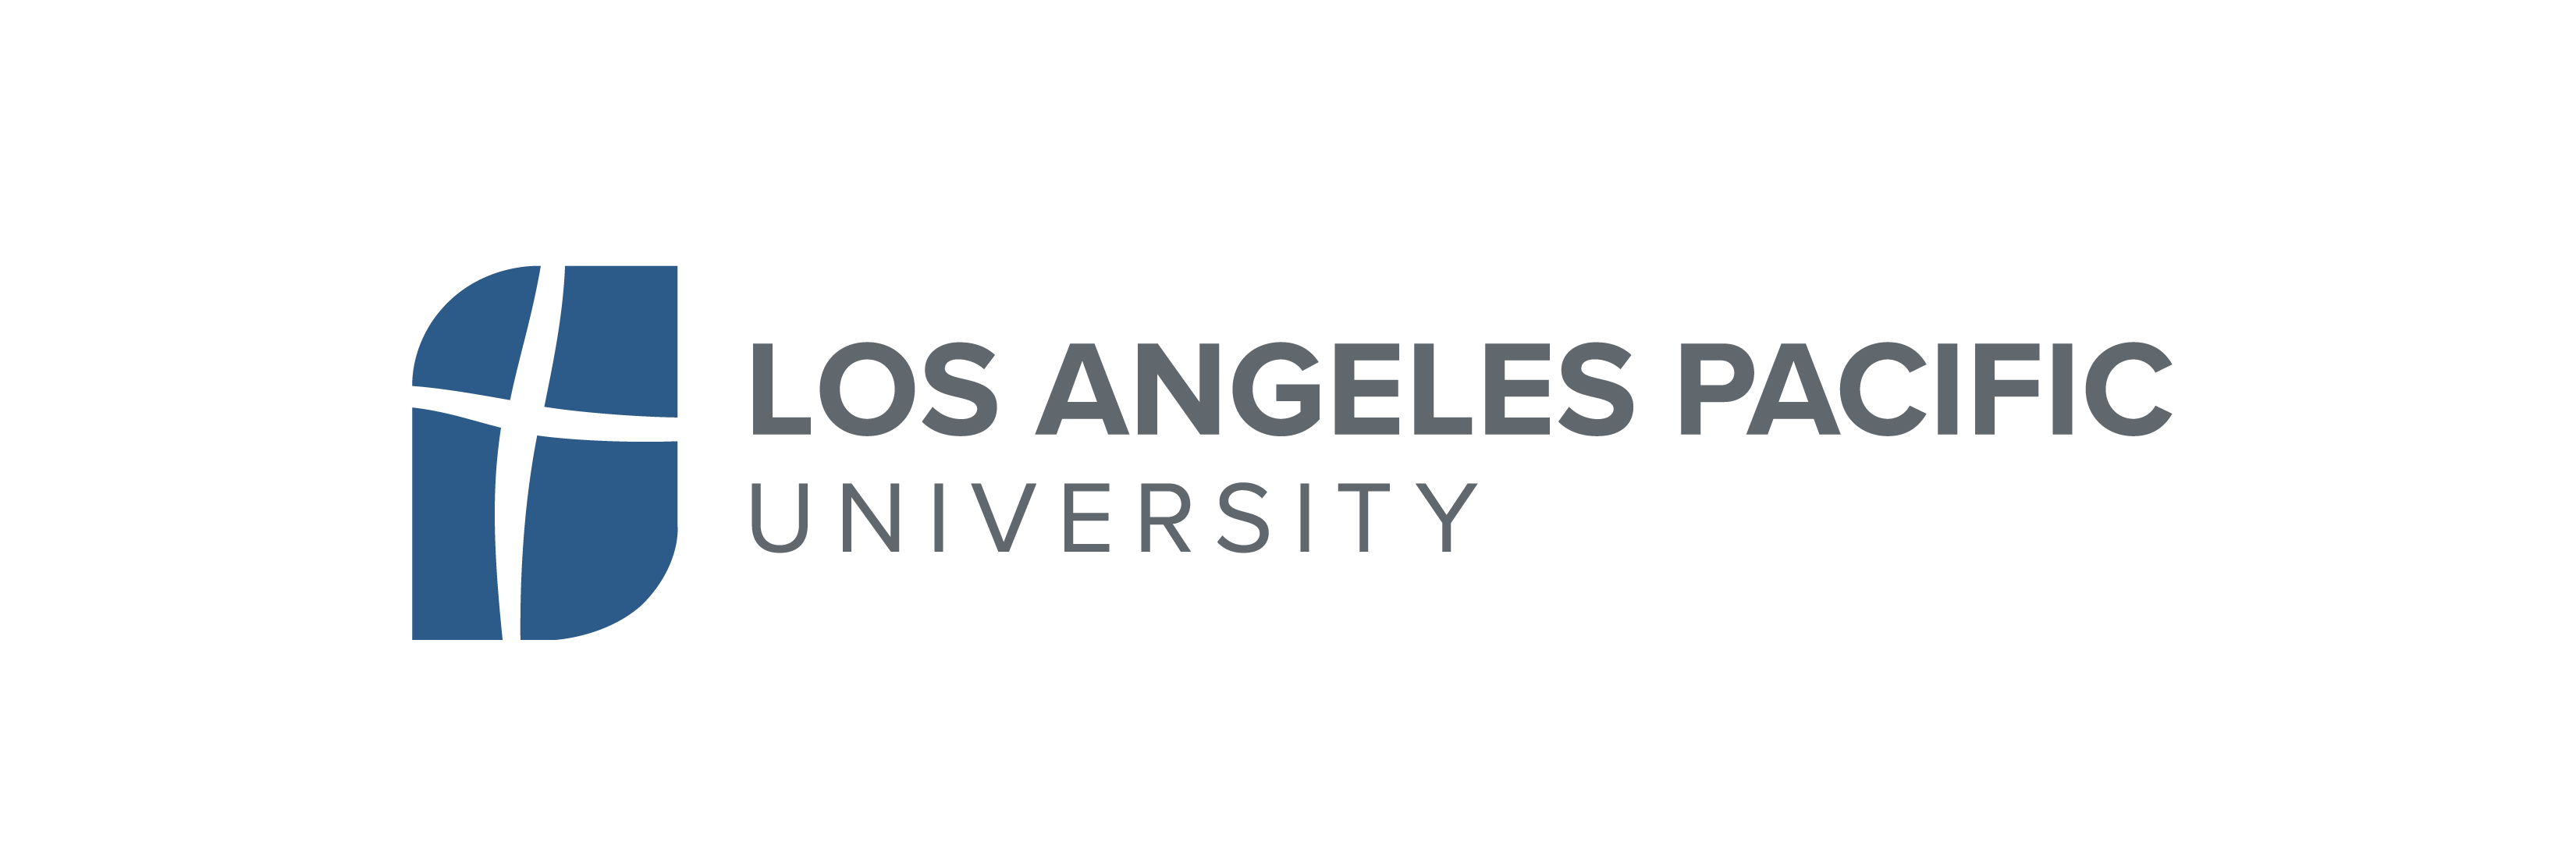 Los Angeles Pacific University